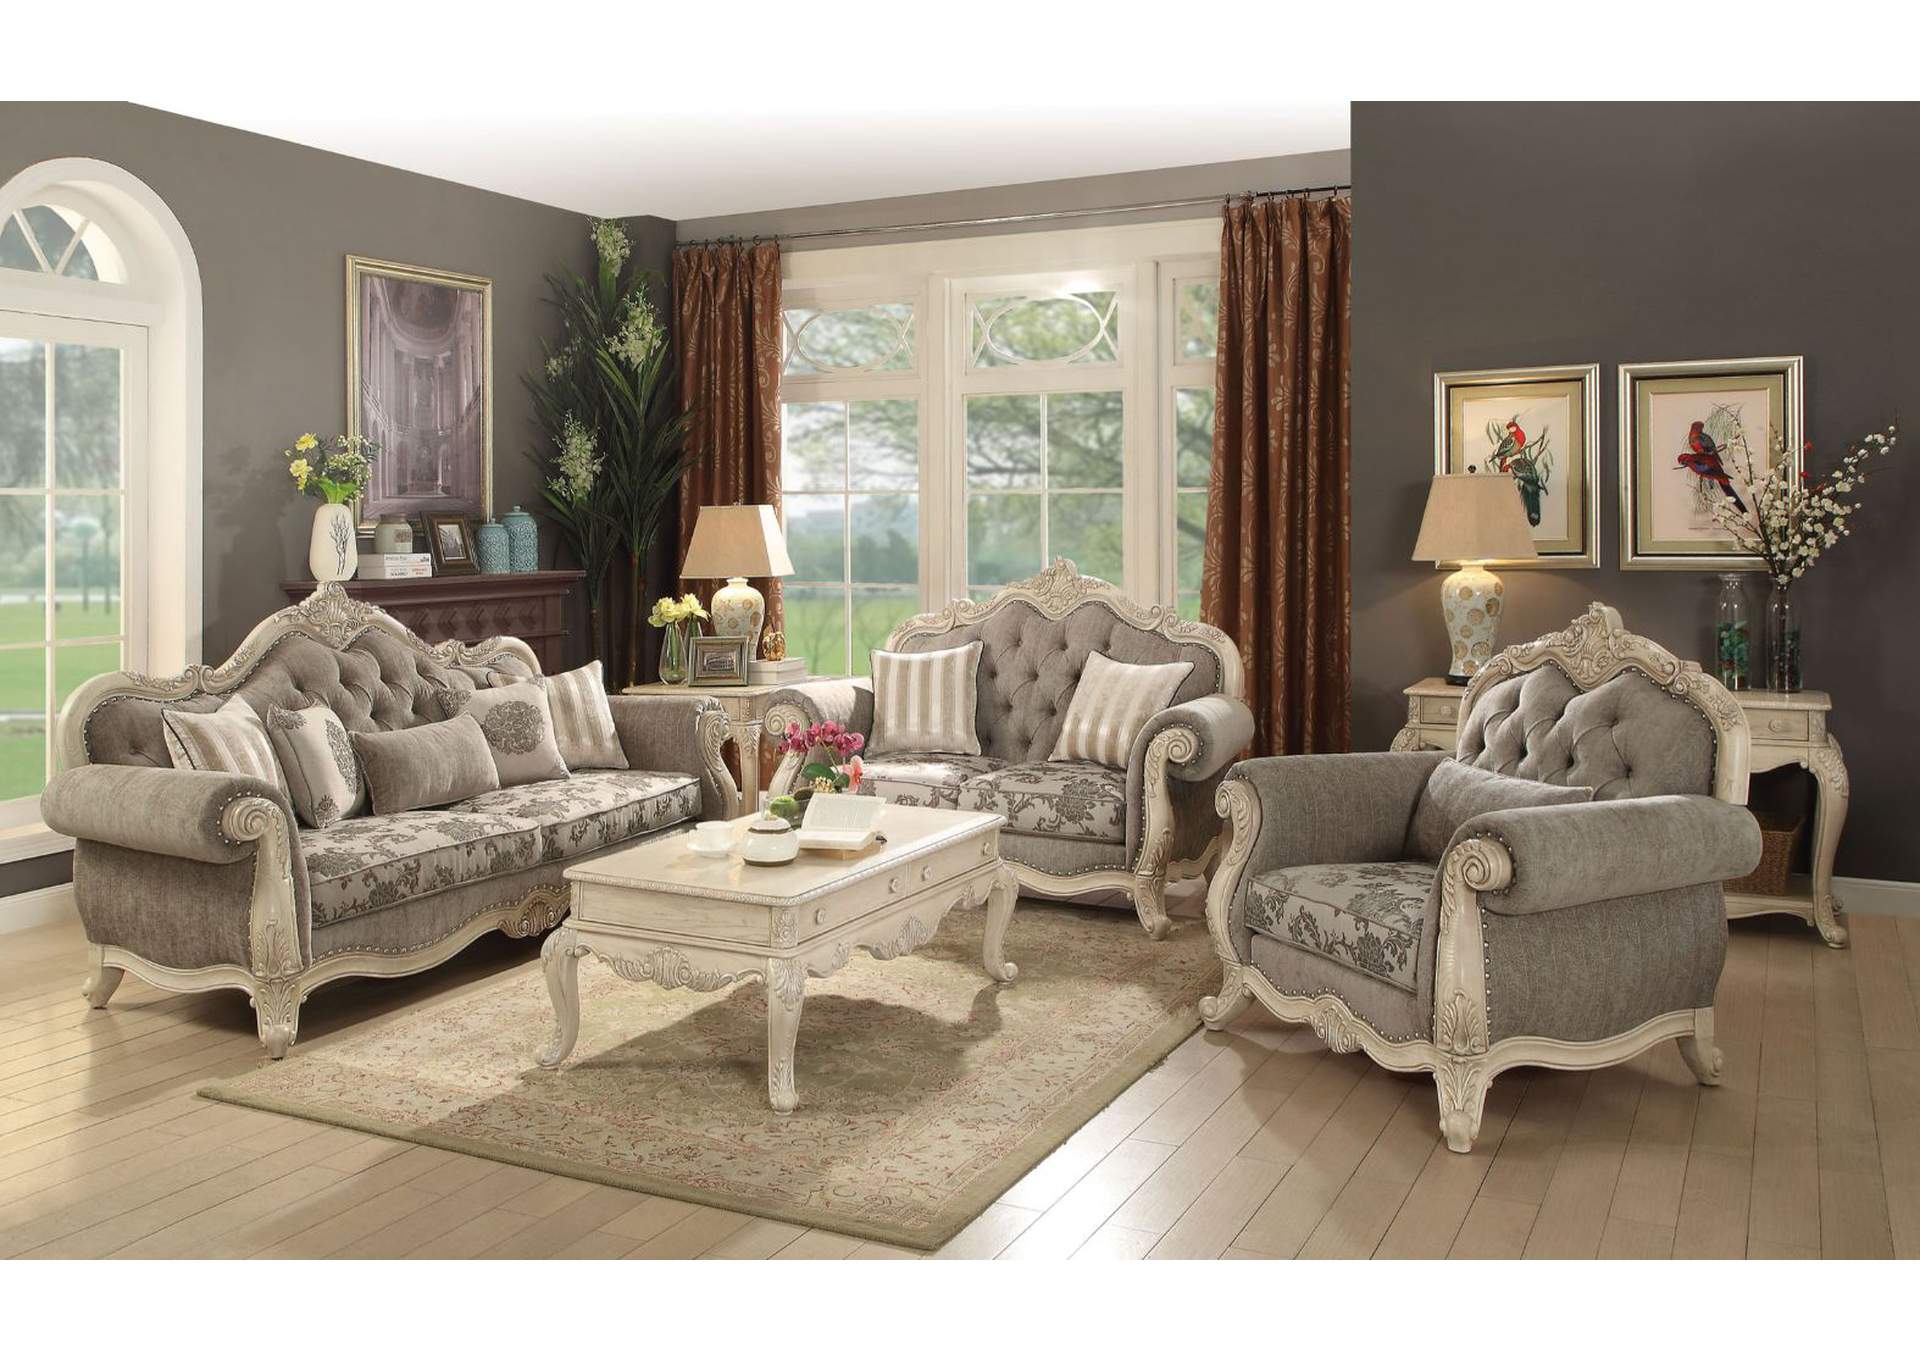 Ragenardus Gray Fabric & Antique White Sofa,Acme